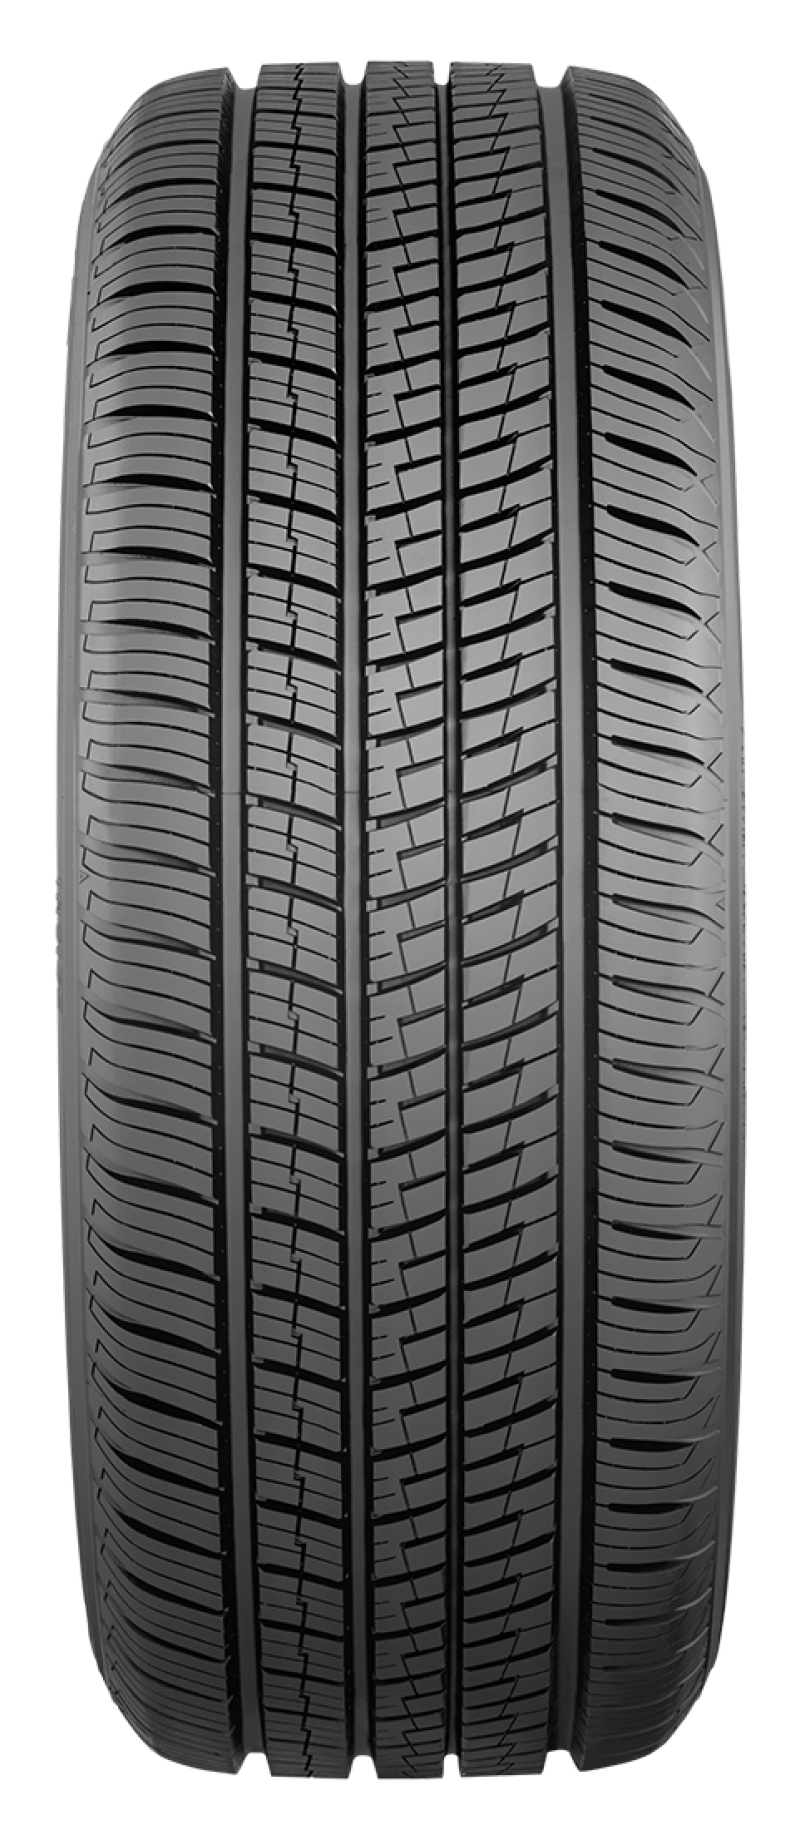  YOKOHAMA AVID ASCEND GT all_ Season Radial Tire-205/60R16 92H :  Automotive